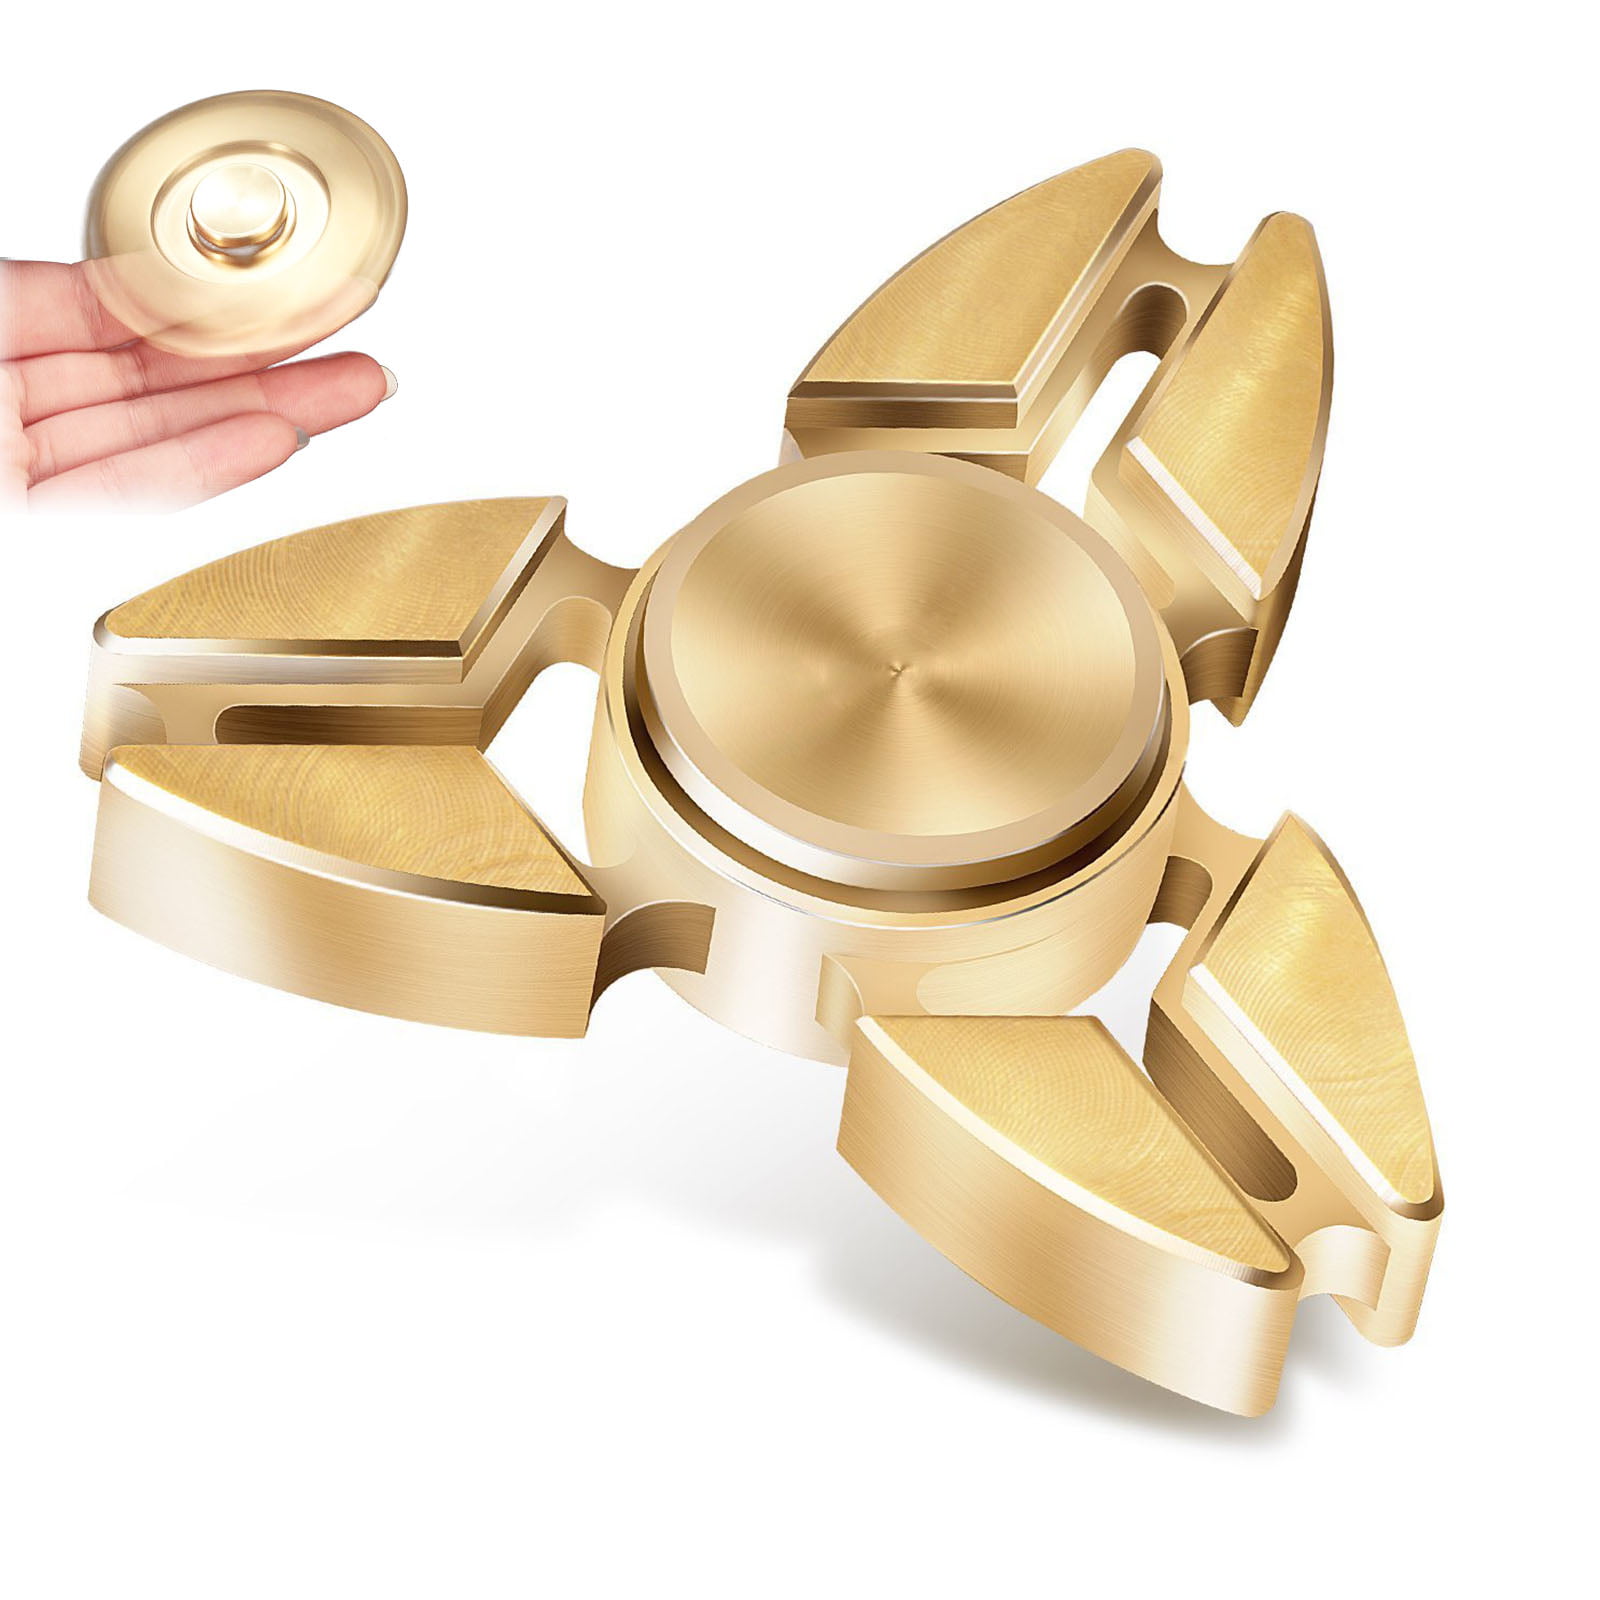 Tri Hand Spinner Triangle Torqbar Brass Finger Toy EDC Focus ADHD Autism 